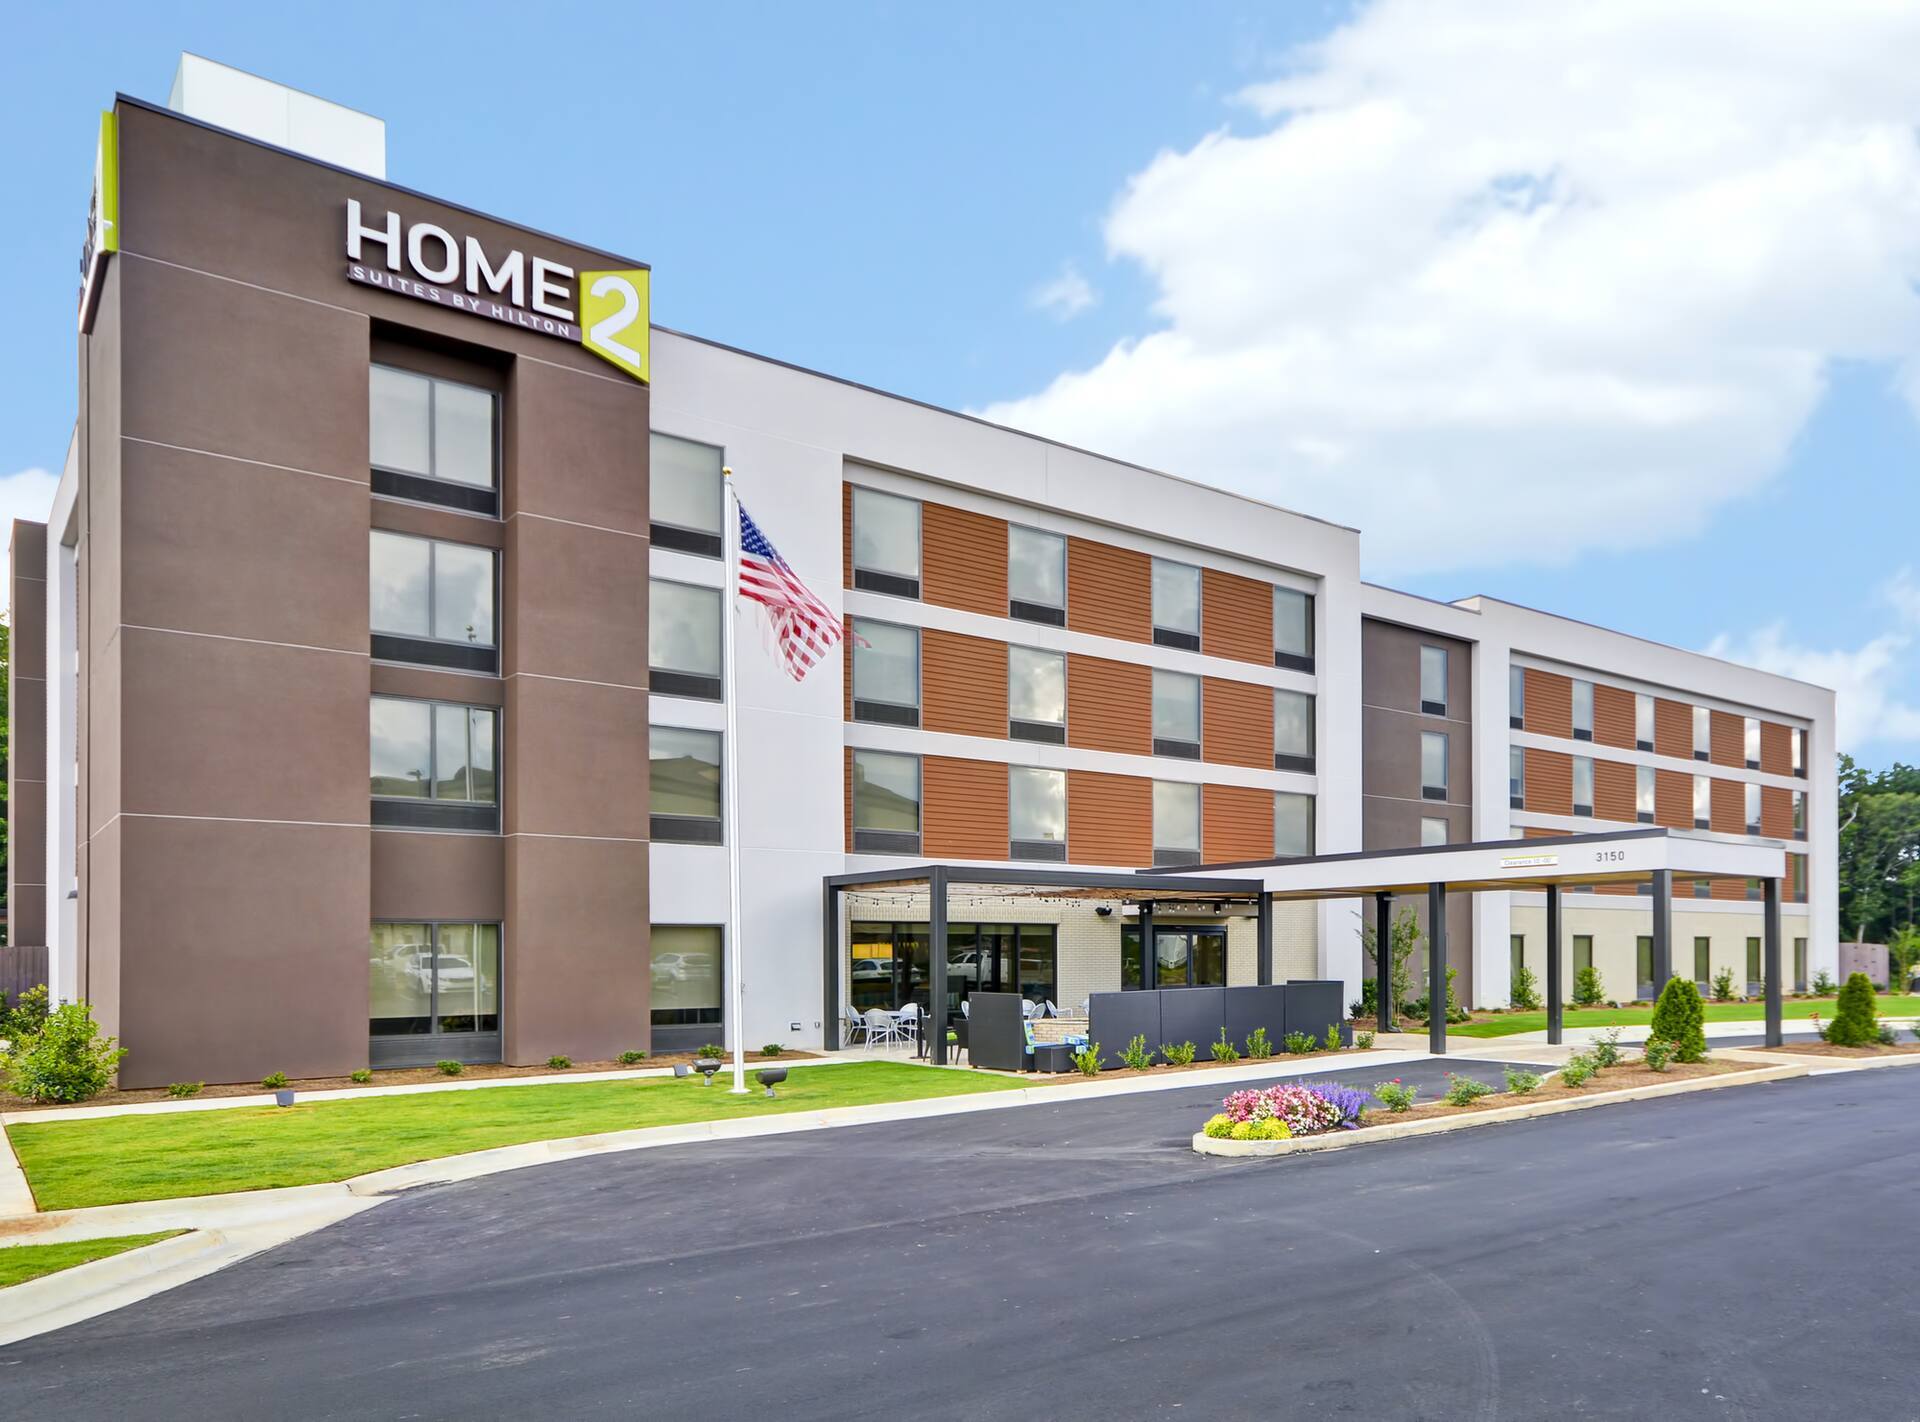 Photo of Home2 Suites by Hilton Opelika Auburn, Opelika, AL